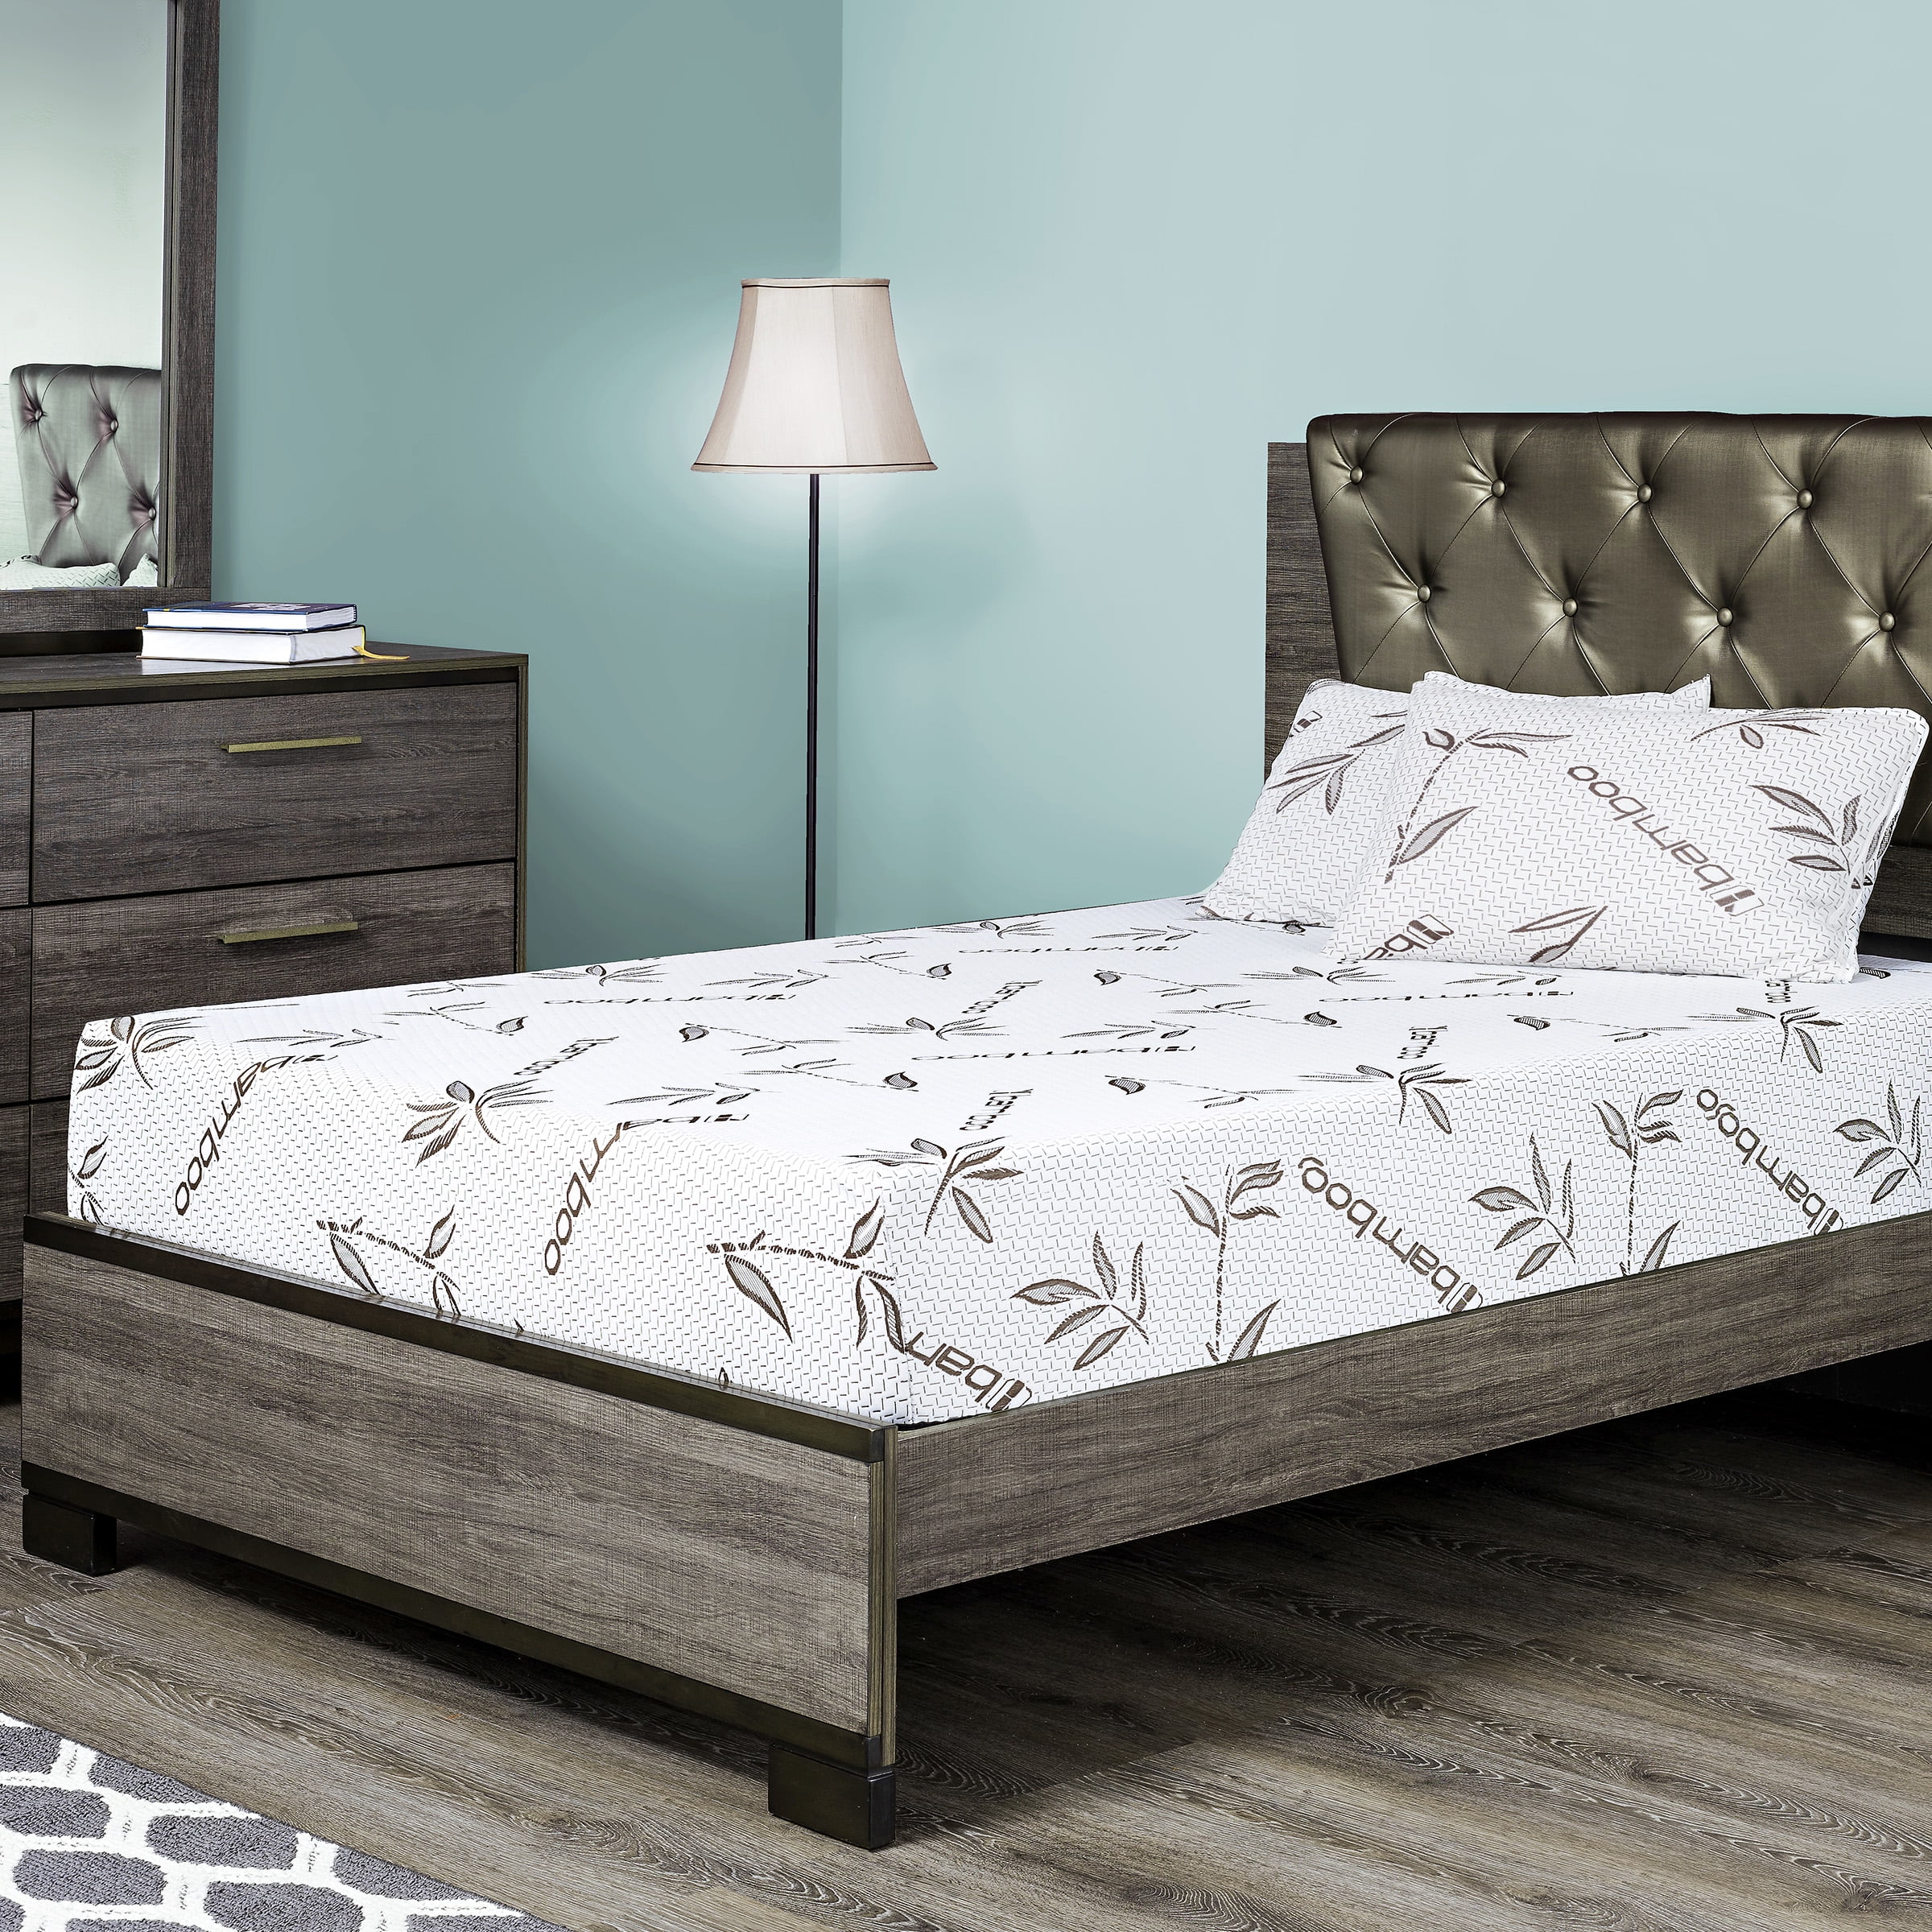 bamboo cot bed mattress